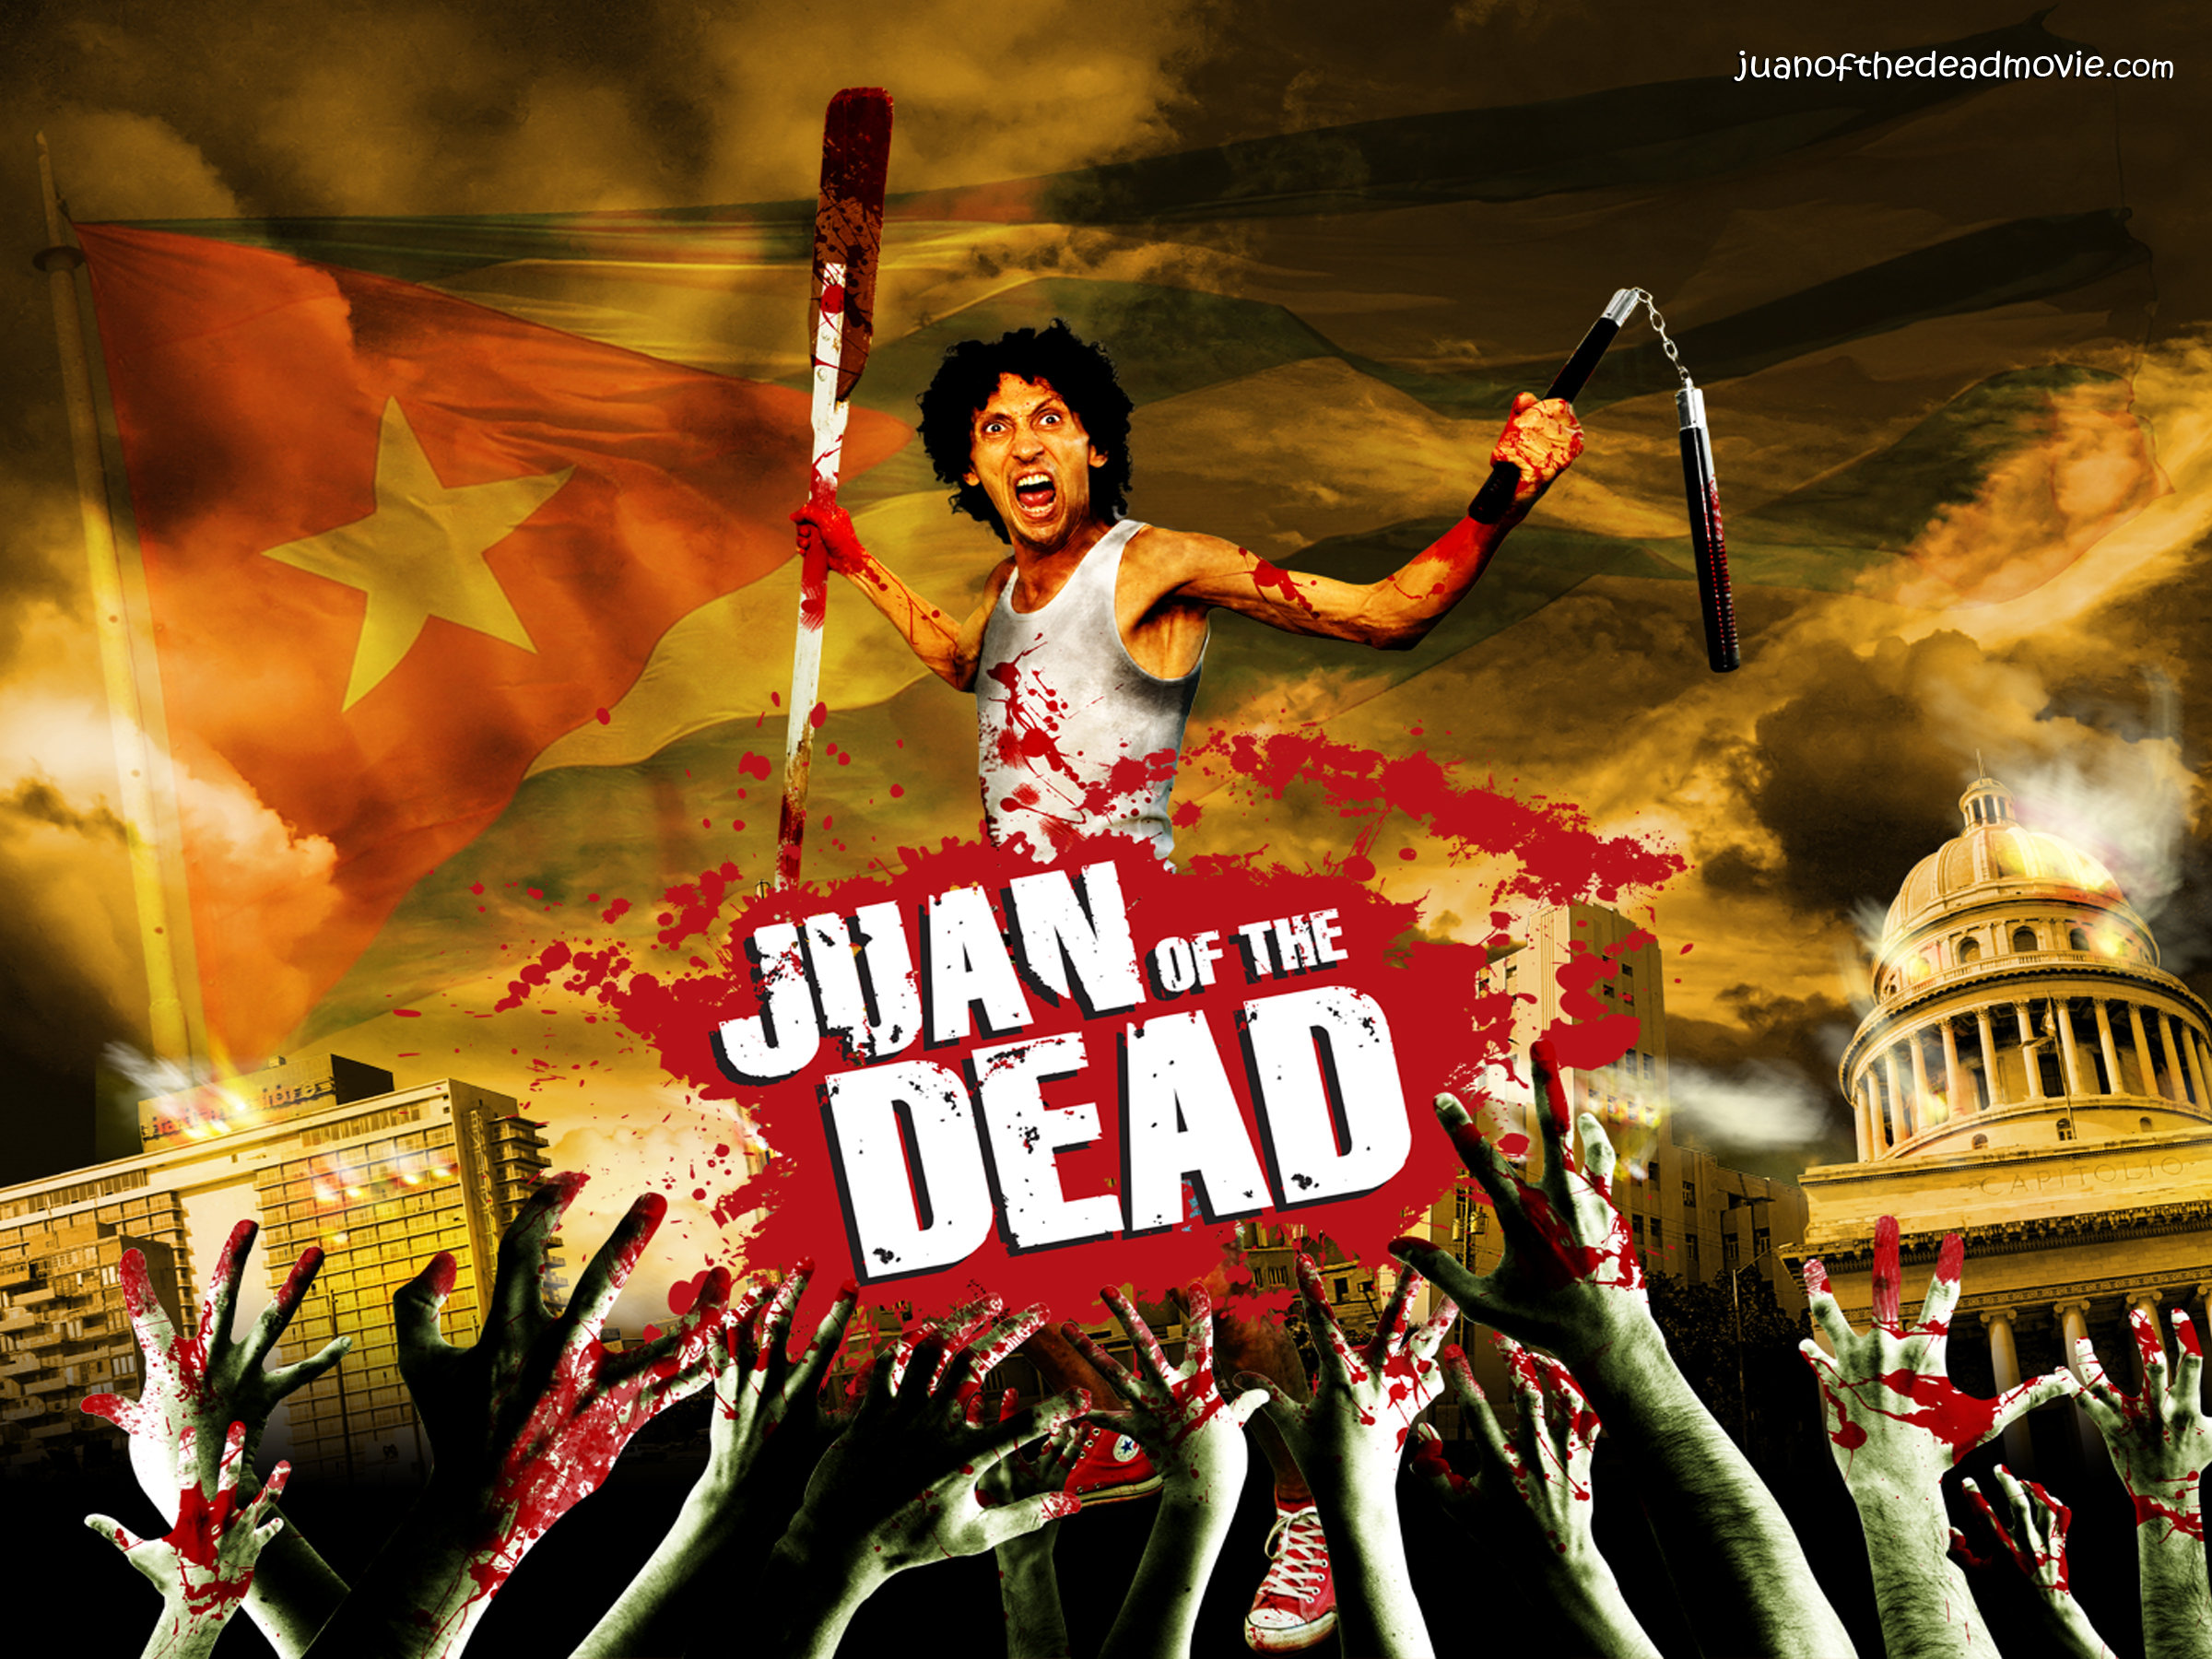 http://www.keyszombieguide.com/wp-content/uploads/2013/02/Juan_Of_The_Dead_Movie.jpg